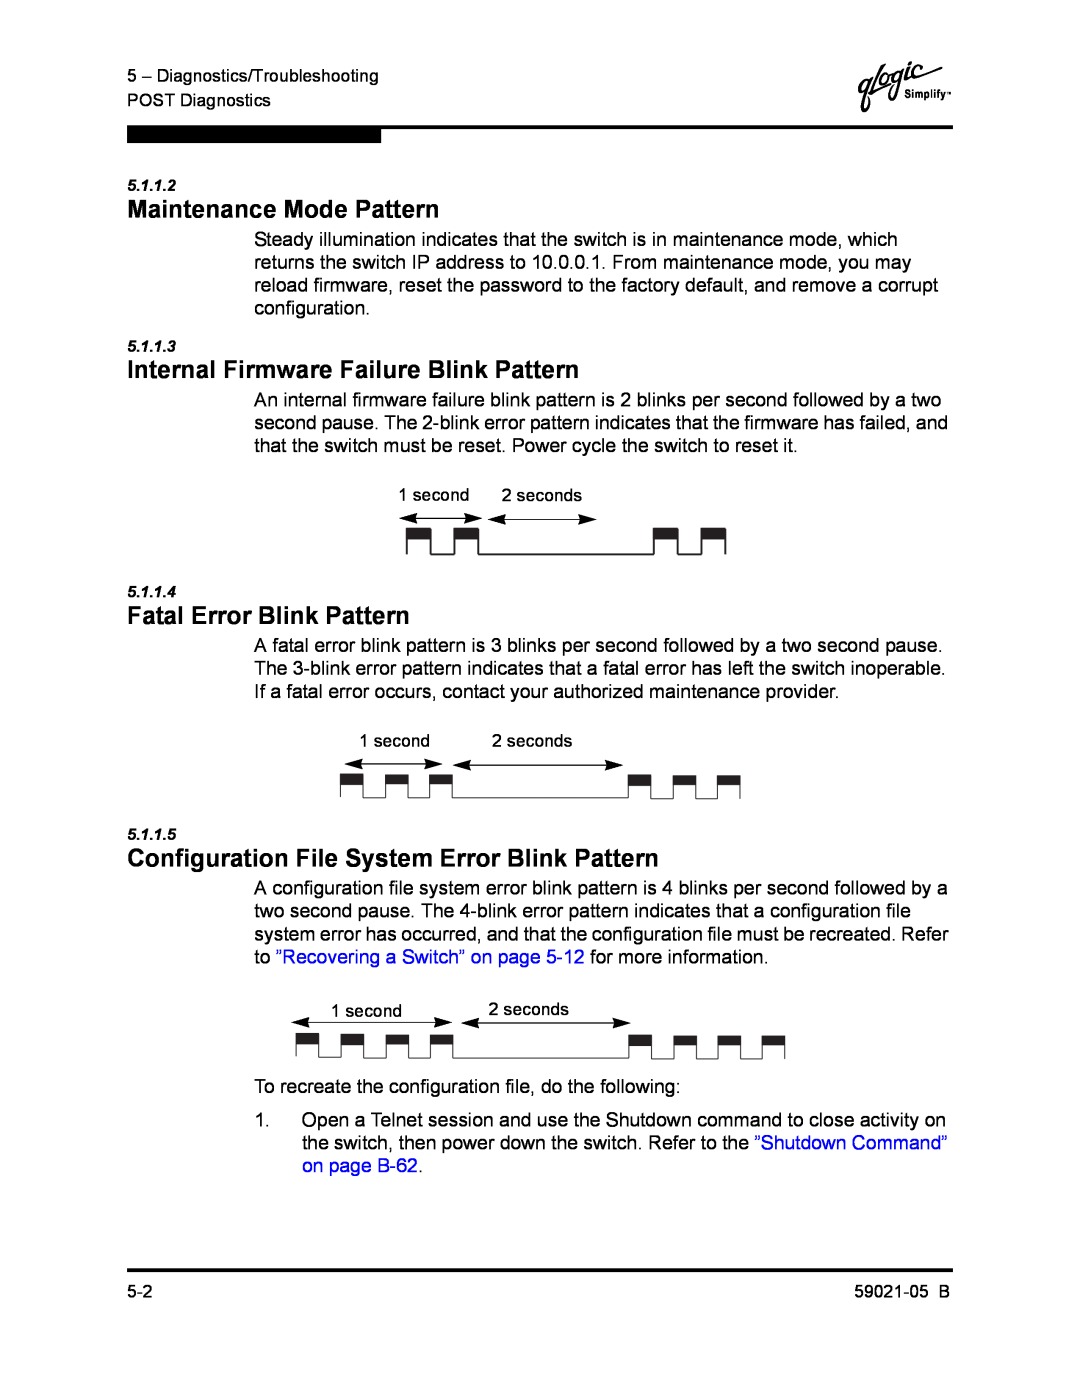 Q-Logic 59021-05 B manual Maintenance Mode Pattern, Internal Firmware Failure Blink Pattern, Fatal Error Blink Pattern 